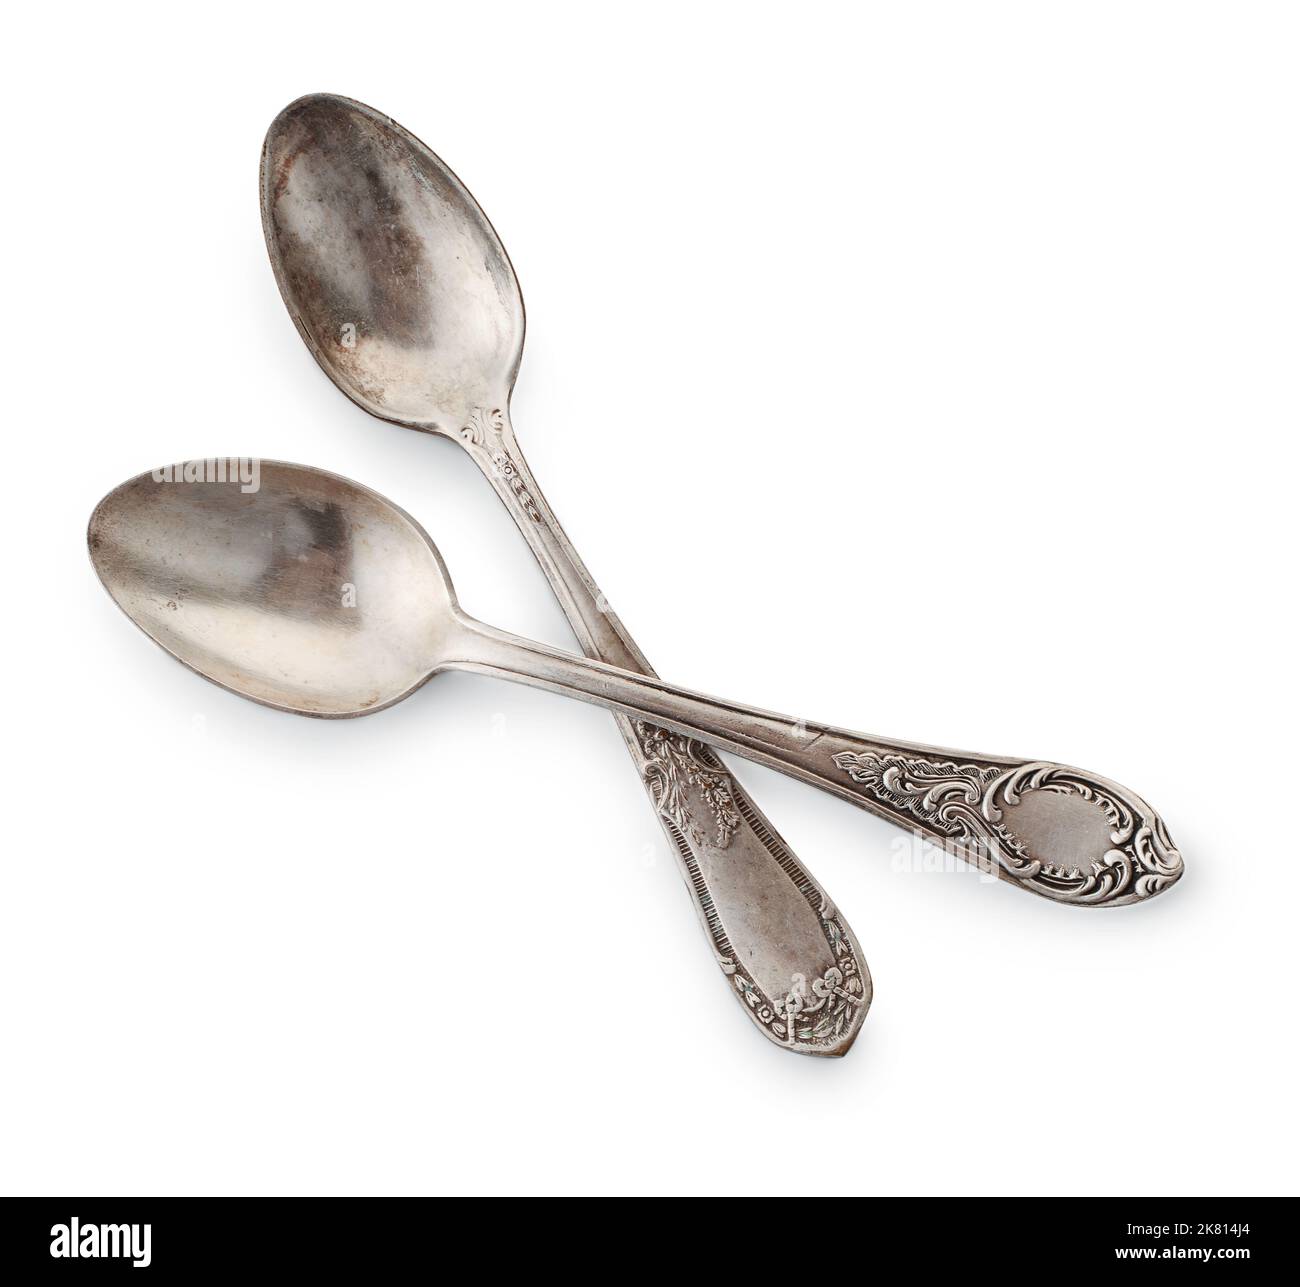 Cucchiaio d'argento immagine stock. Immagine di cucchiaio - 35336983